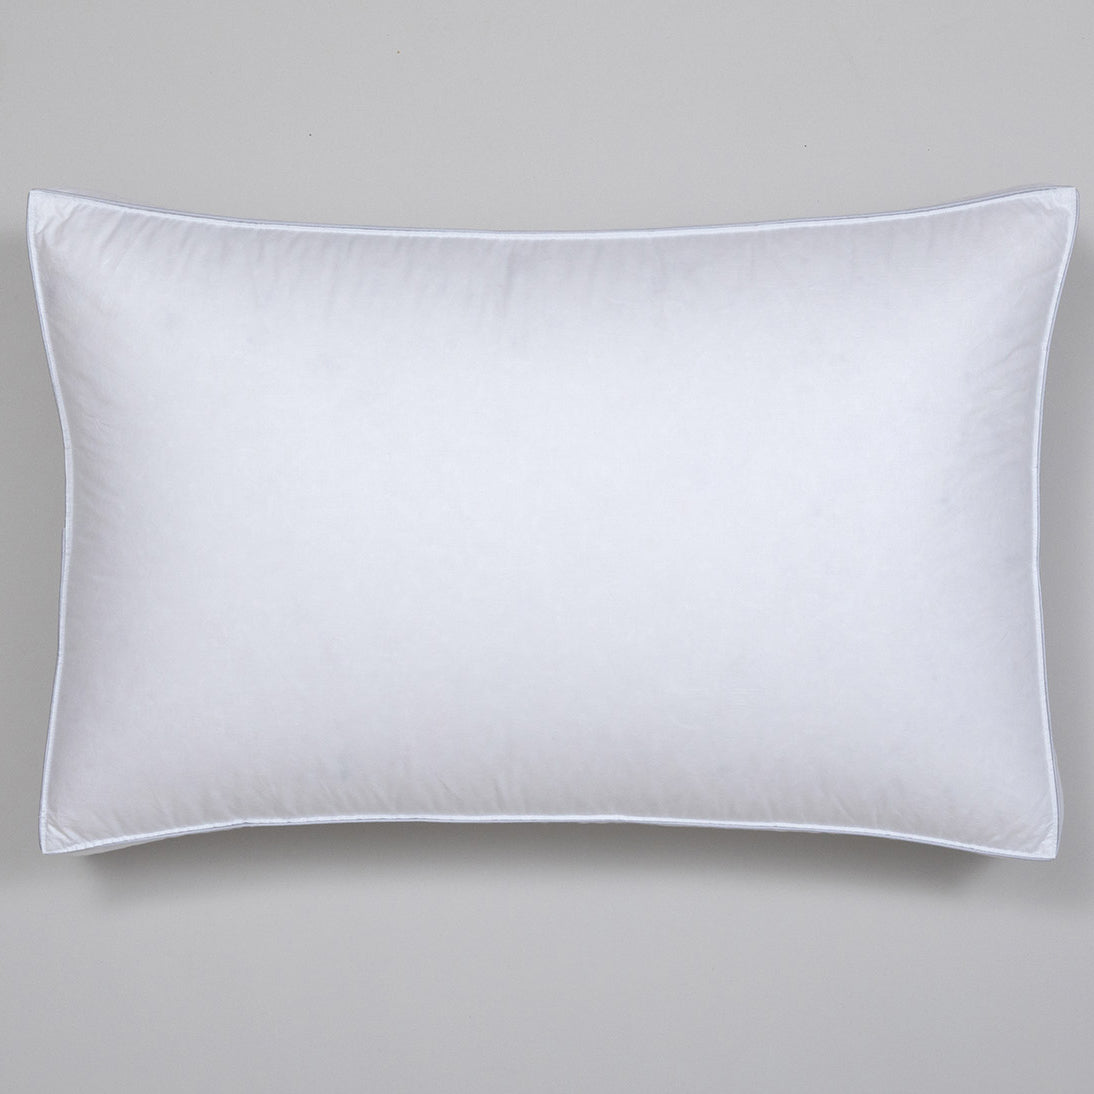 Prestige Pillows